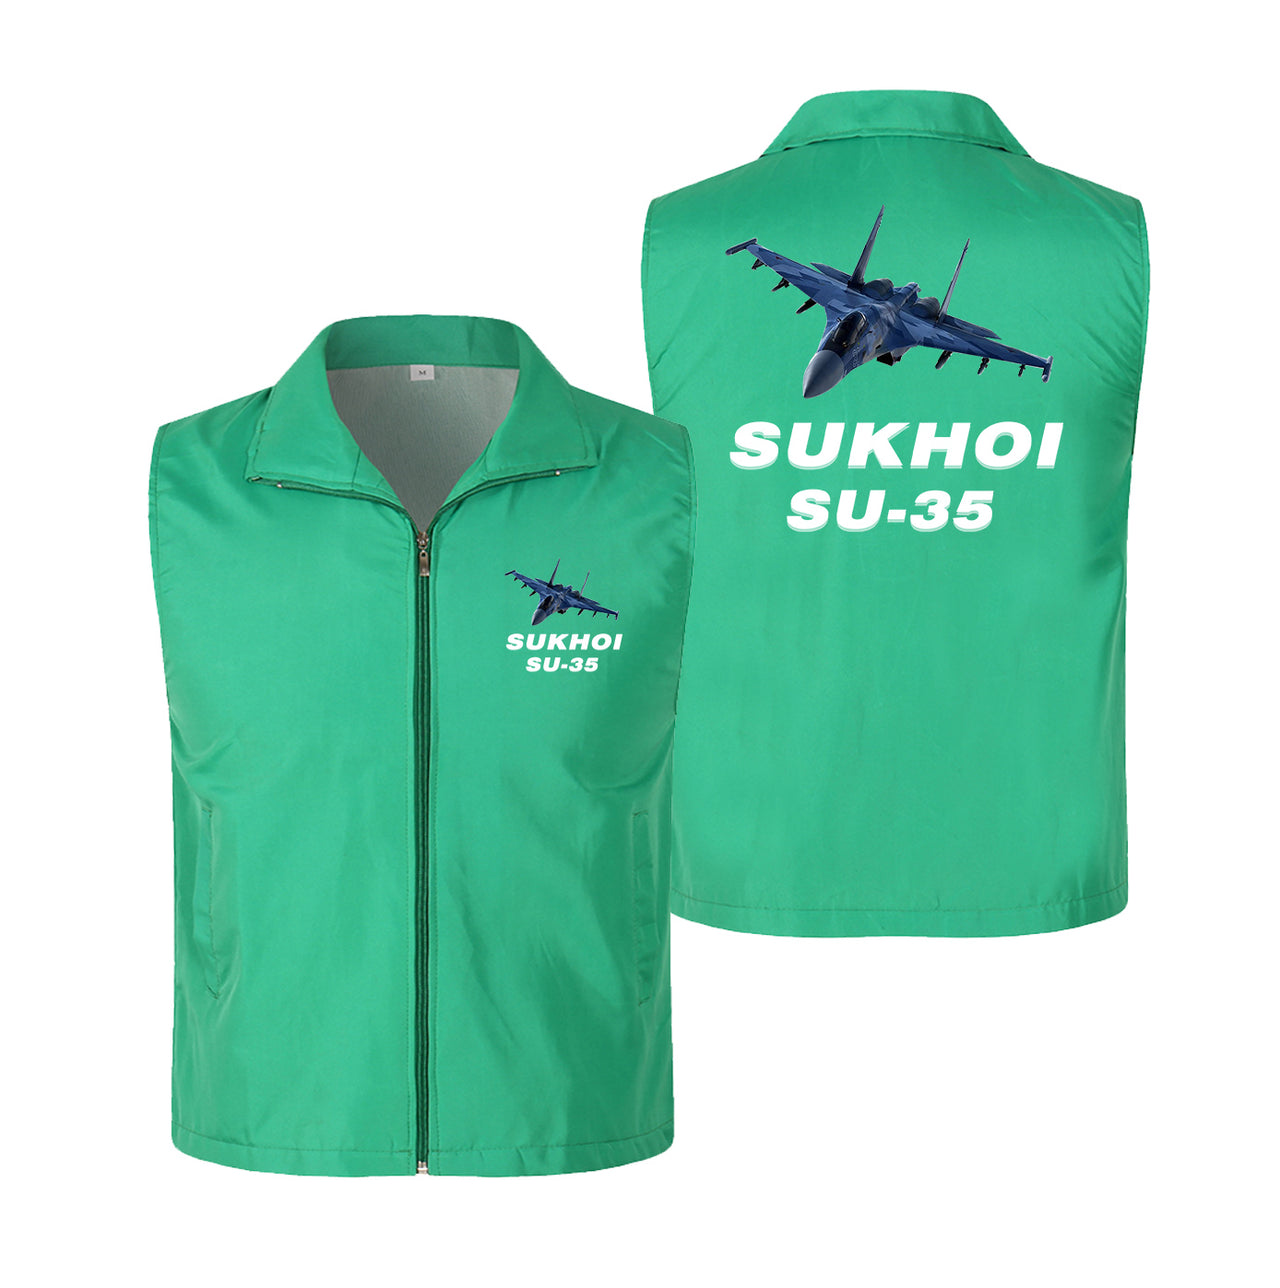 The Sukhoi SU-35 Designed Thin Style Vests